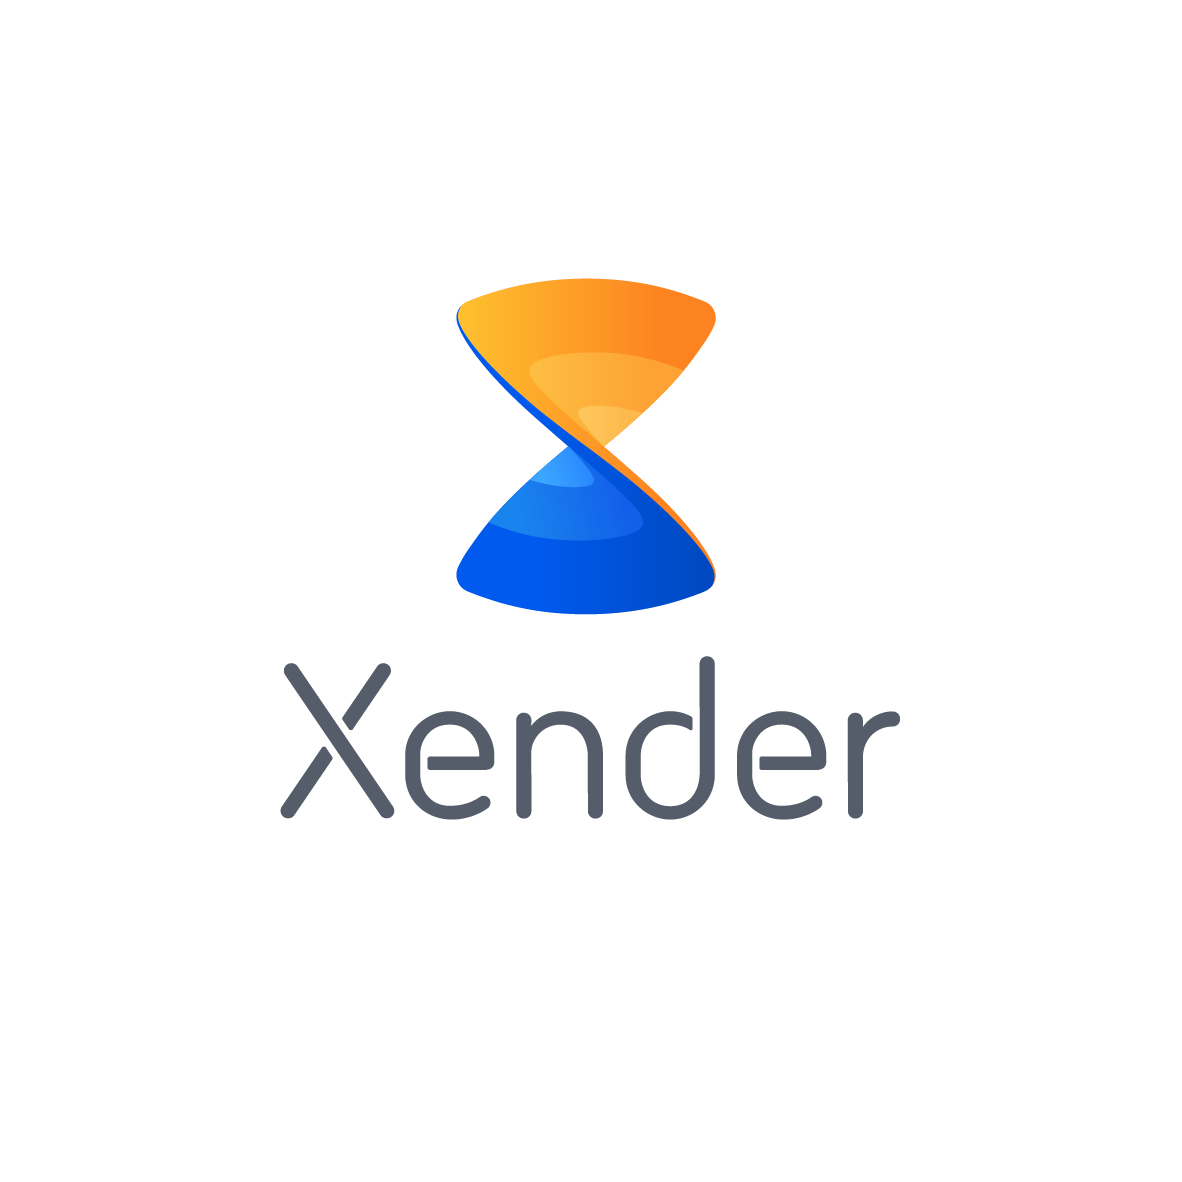 How To Create An App Like Xender